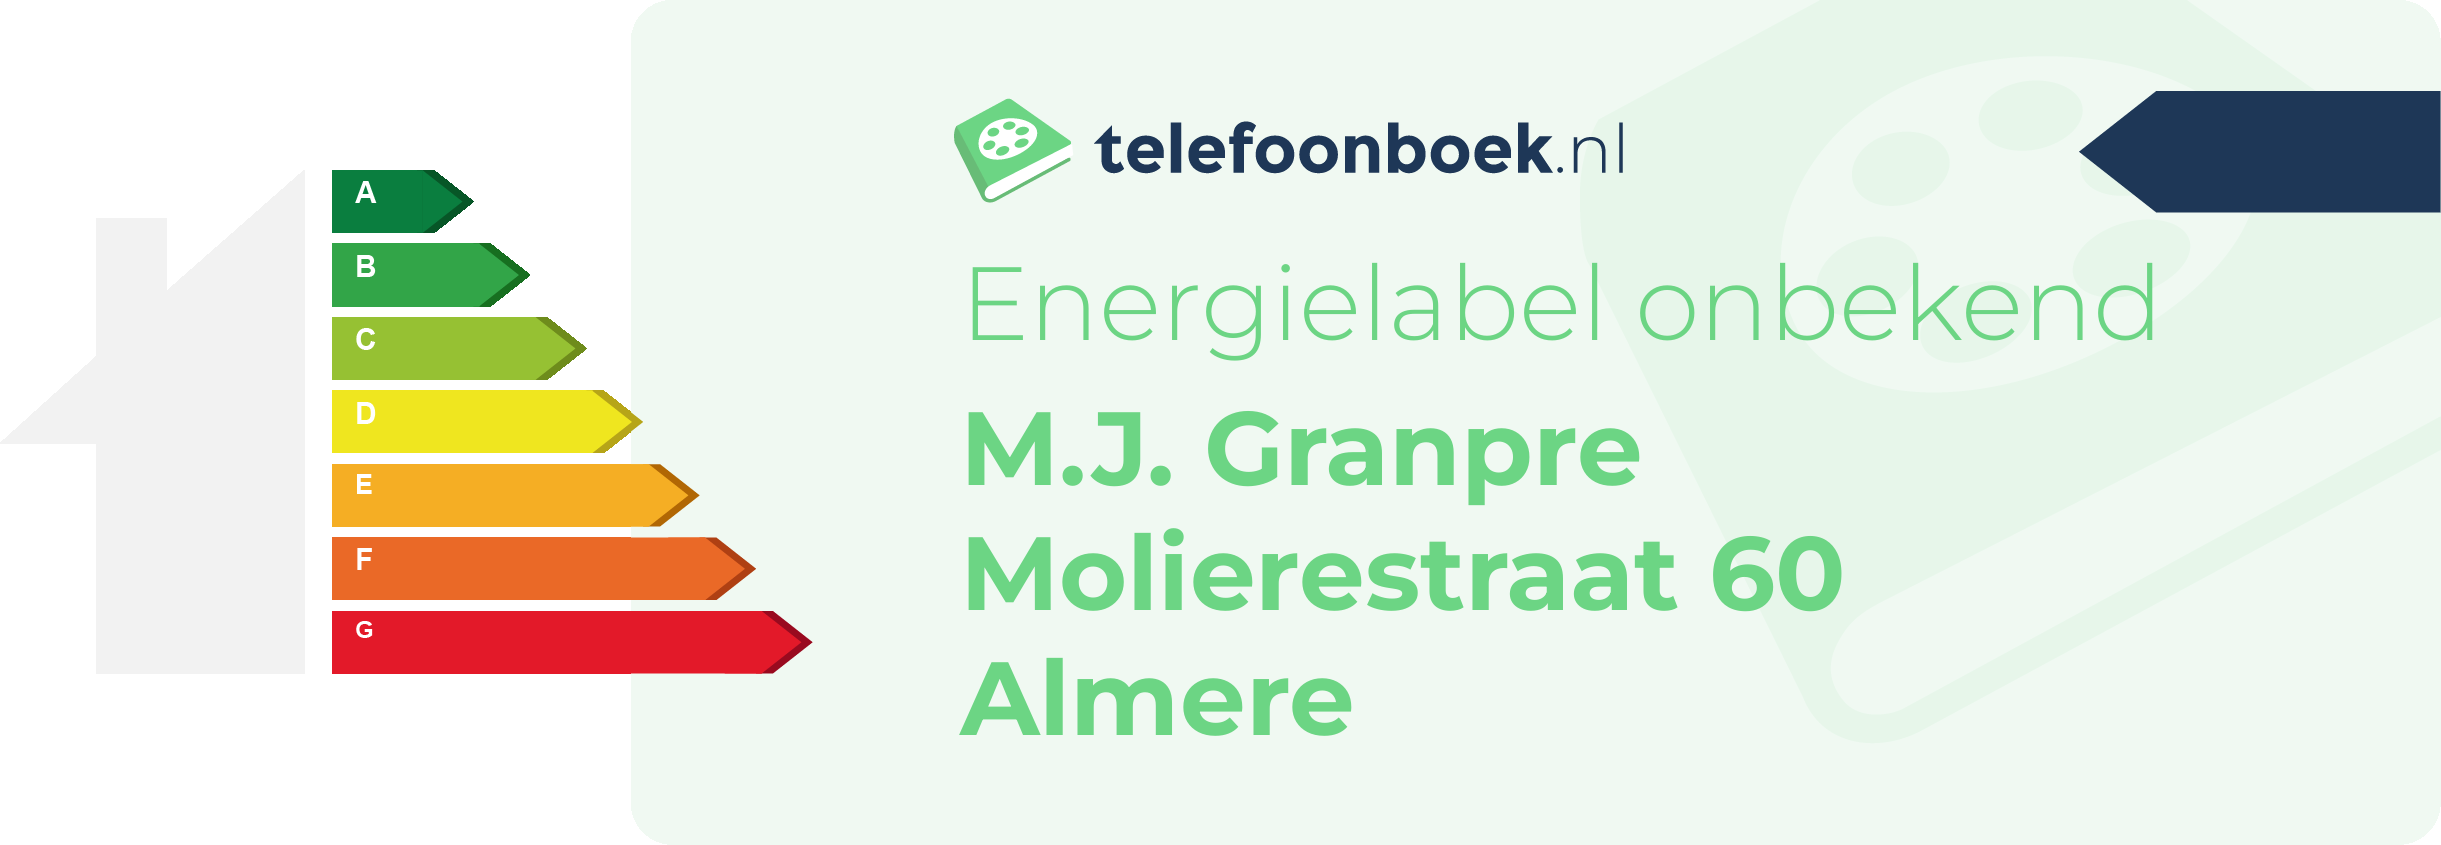 Energielabel M.J. Granpre Molierestraat 60 Almere